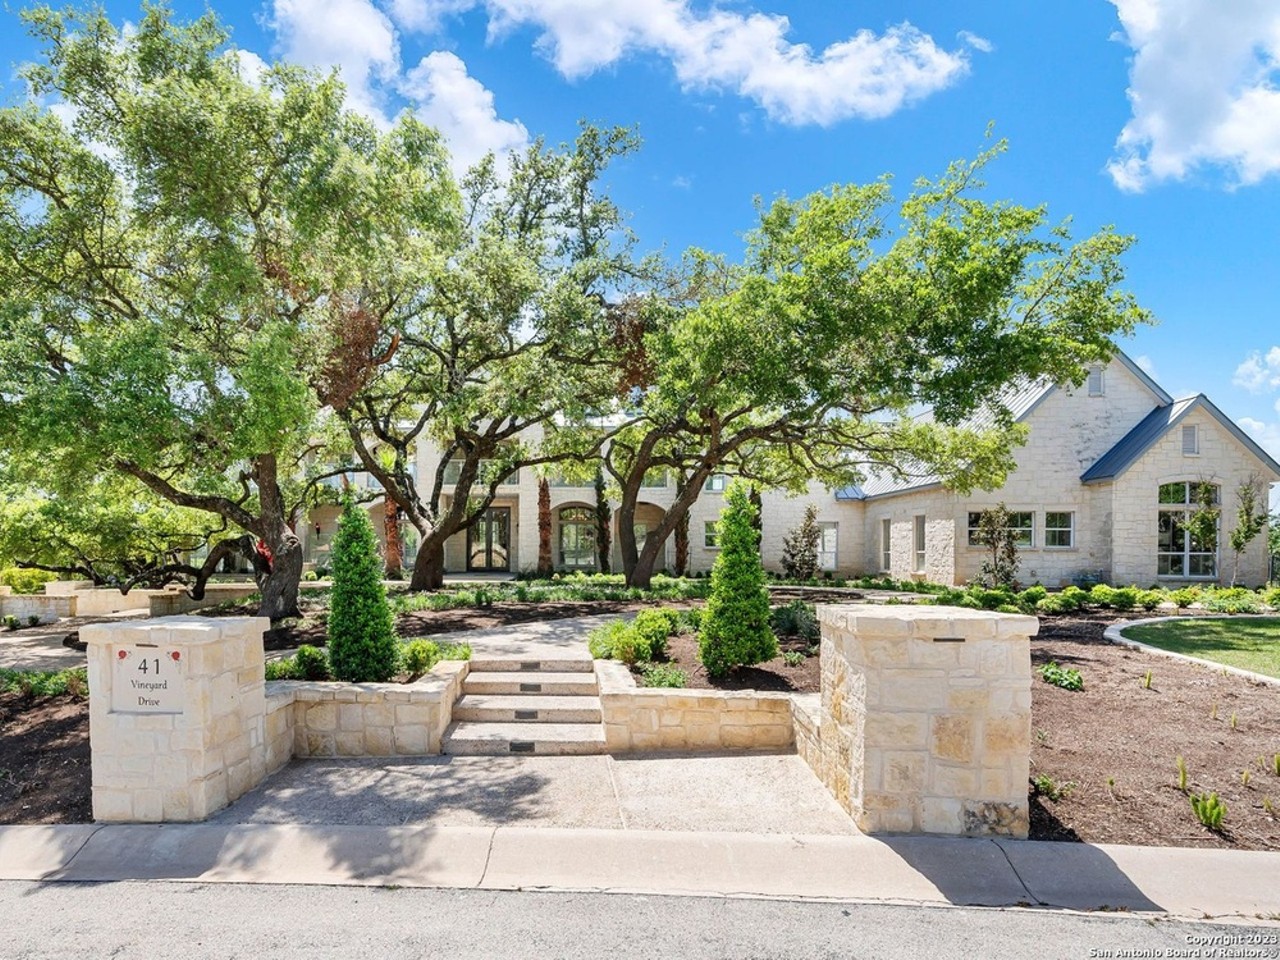 Gregg Popovich's former San Antonio home still on the market after $1.5 million in price cuts